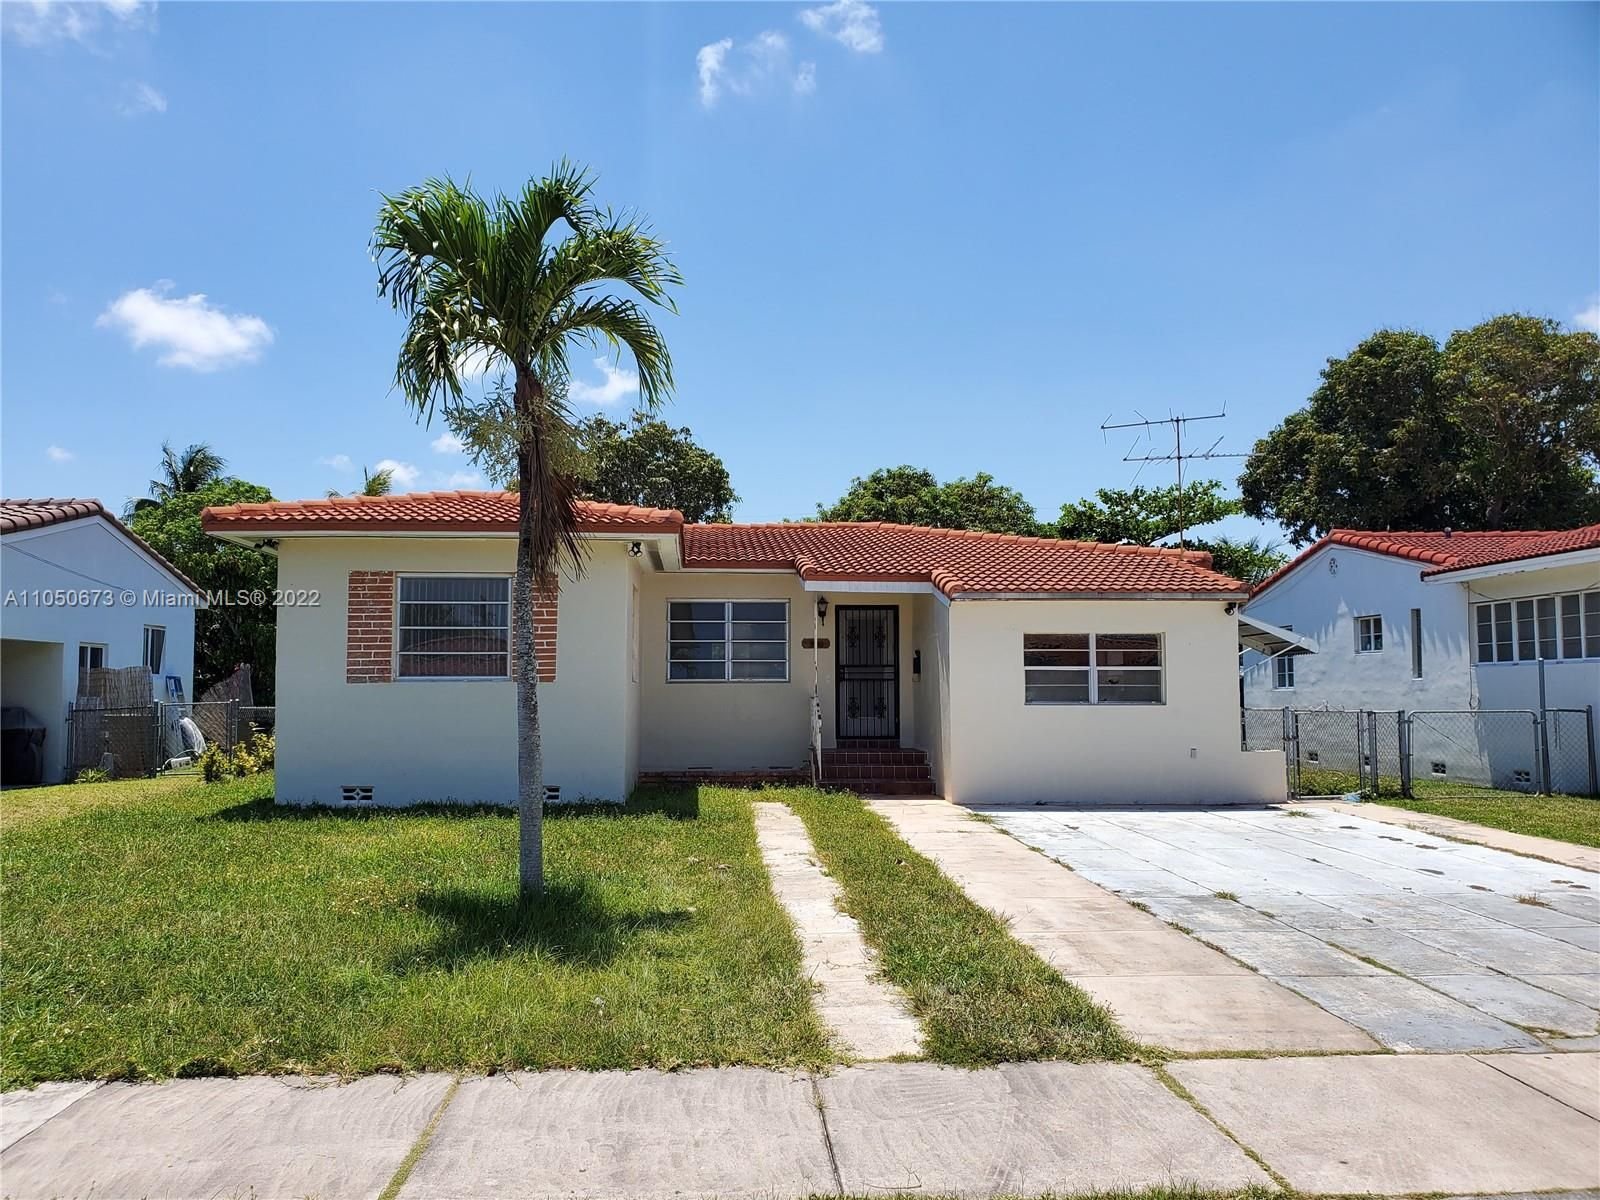 Real estate property located at 300 30th Ct, Miami-Dade County, Miami, FL